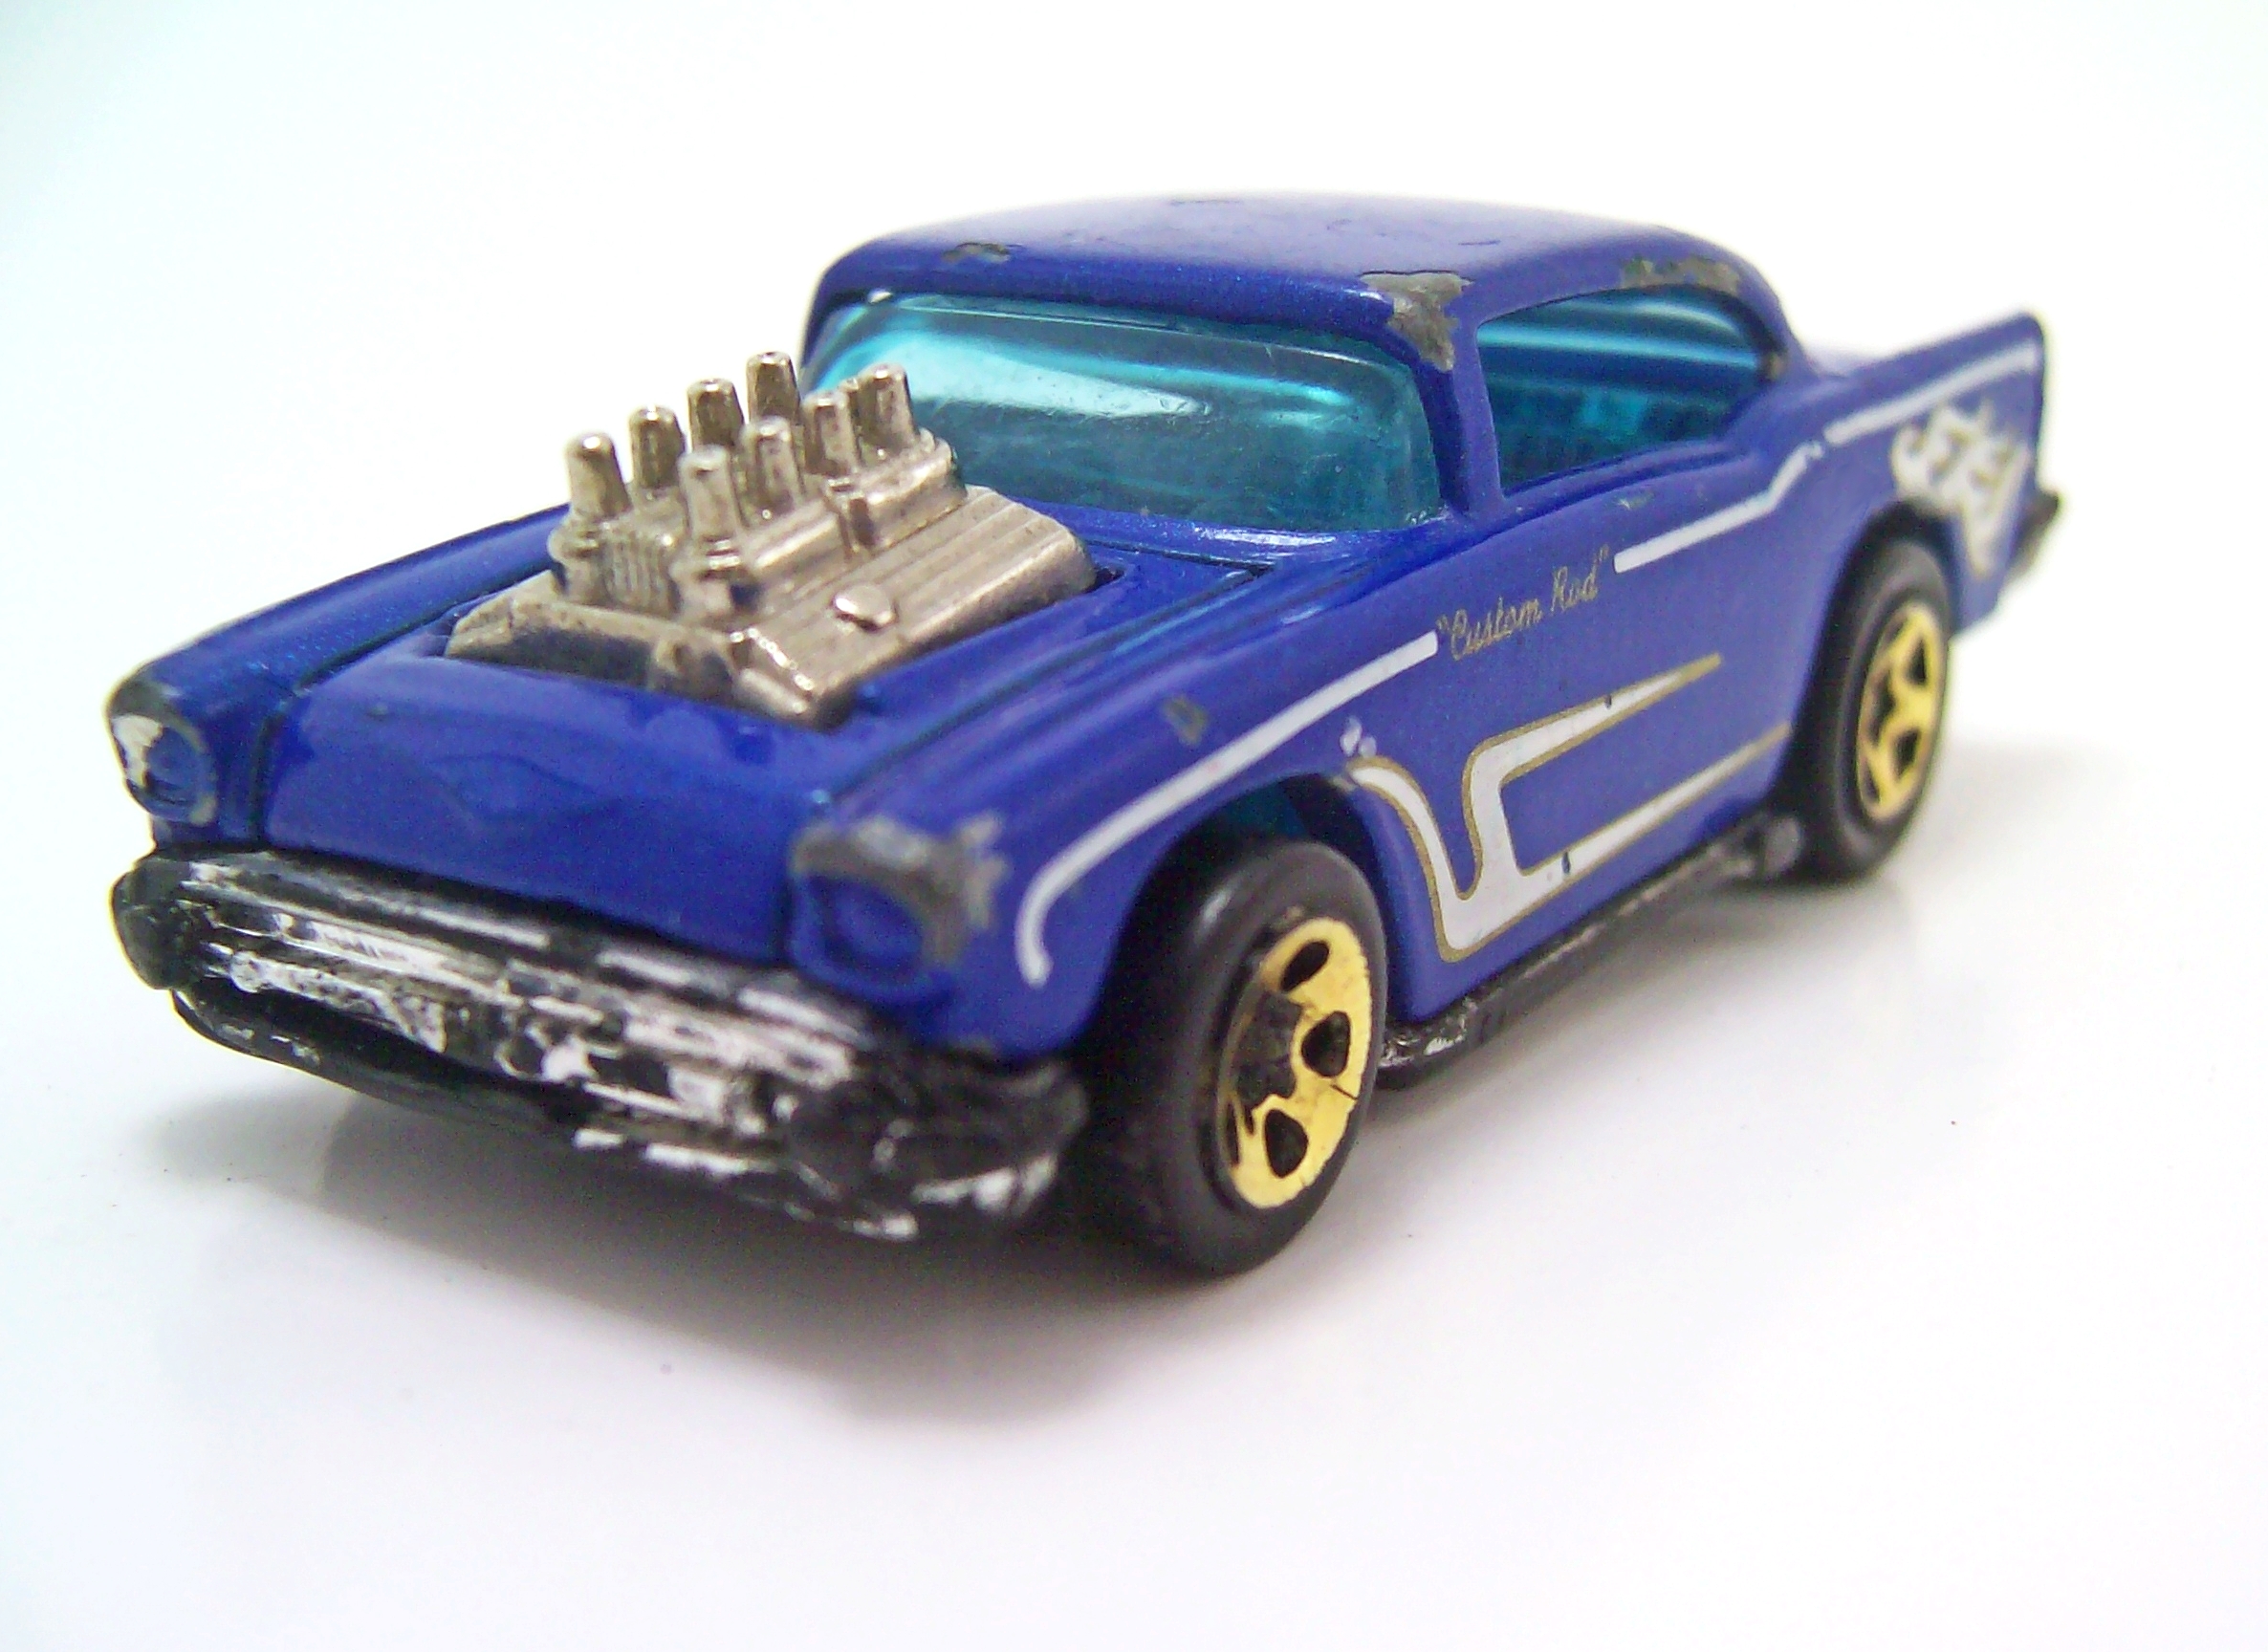 Toy car, Automobile, Blue, Car, Engine, HQ Photo